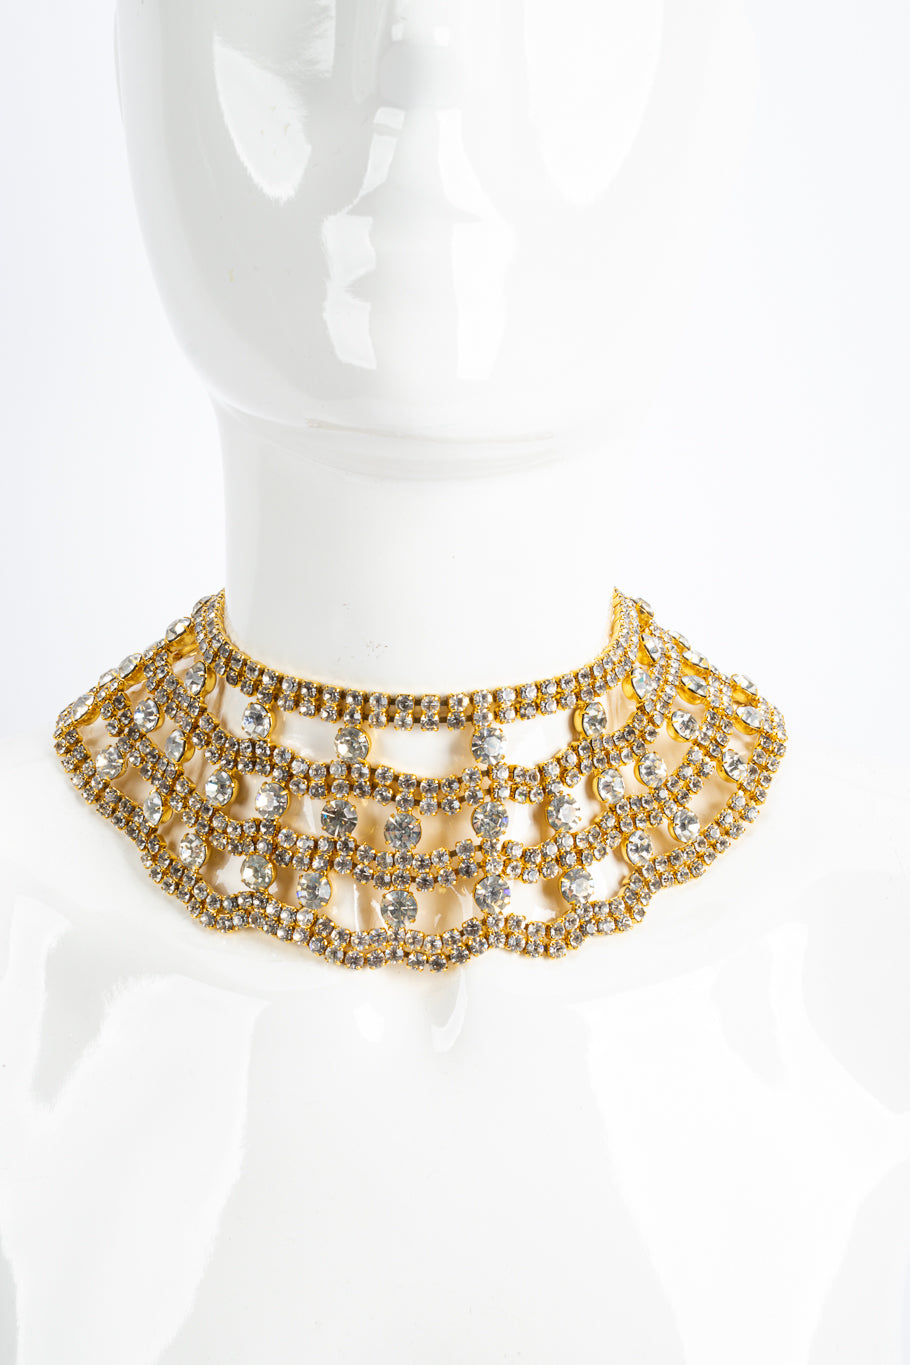 Rhinestone collar necklace by Weiss mannequin front @recessla